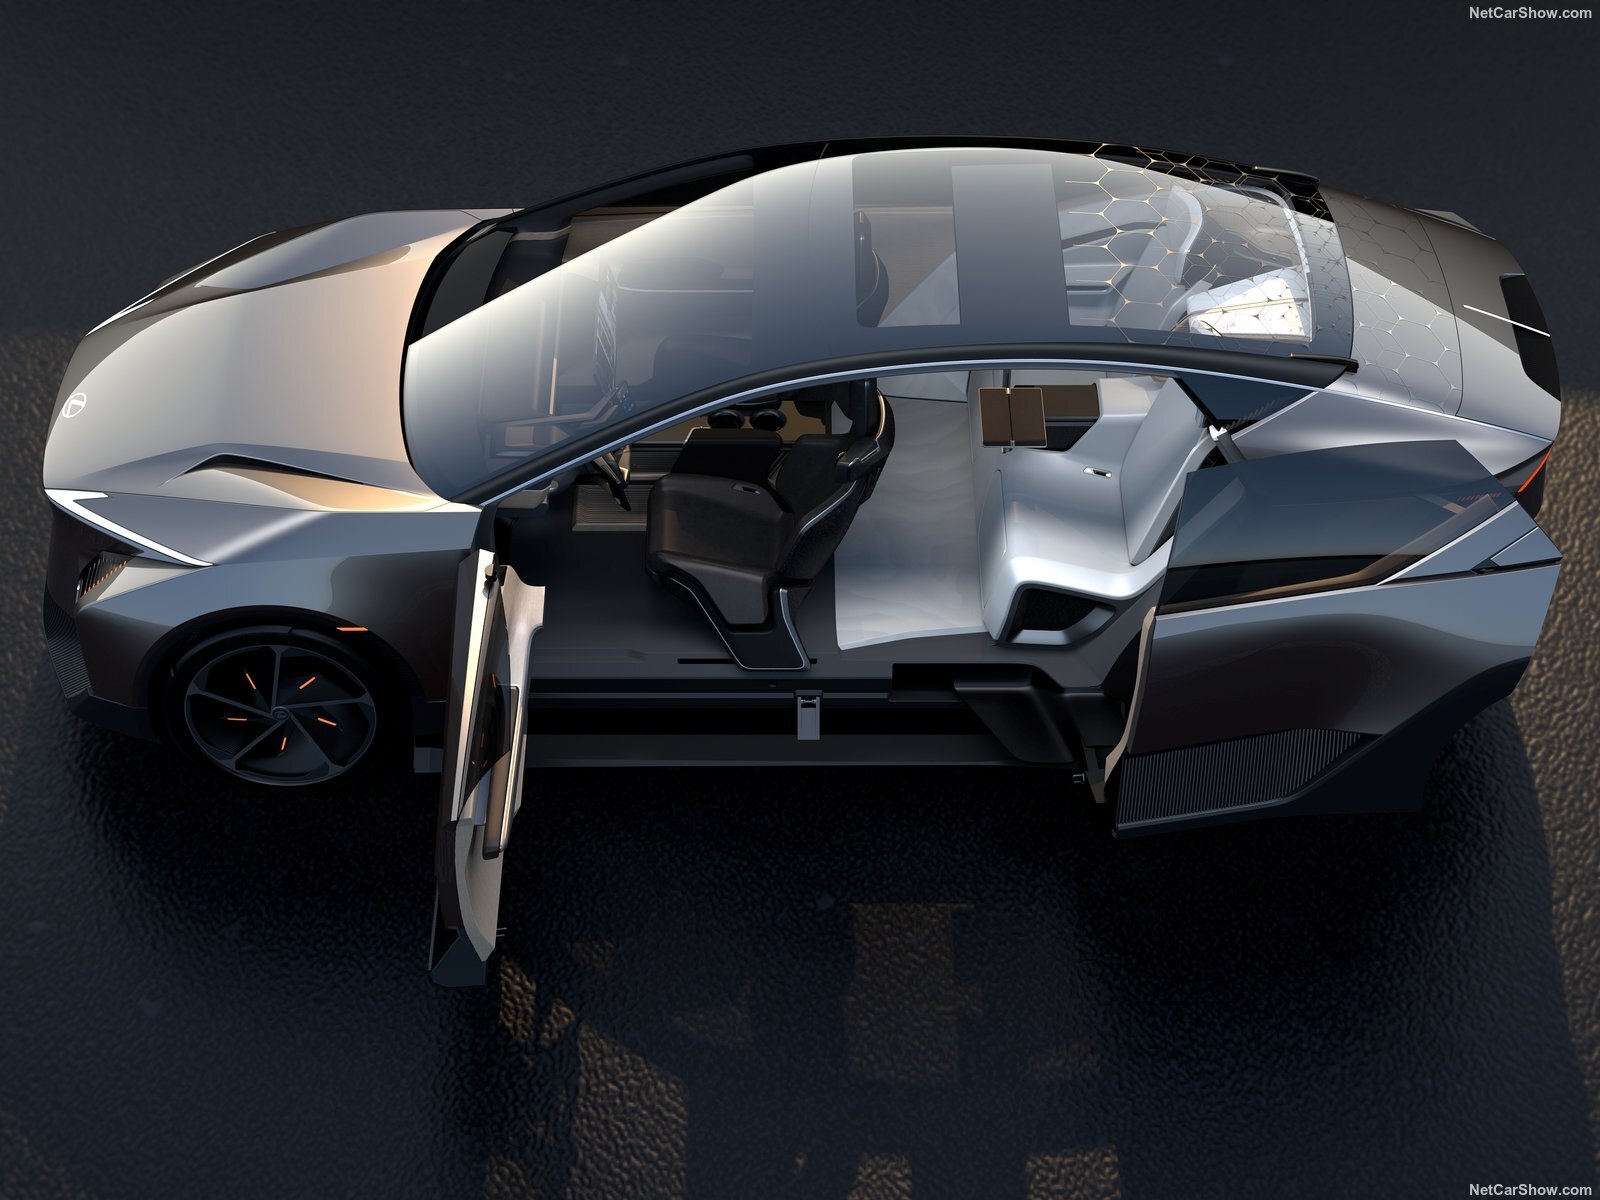 2023 -[Lexus] LF-ZC/LF-ZF Concepts 8il7